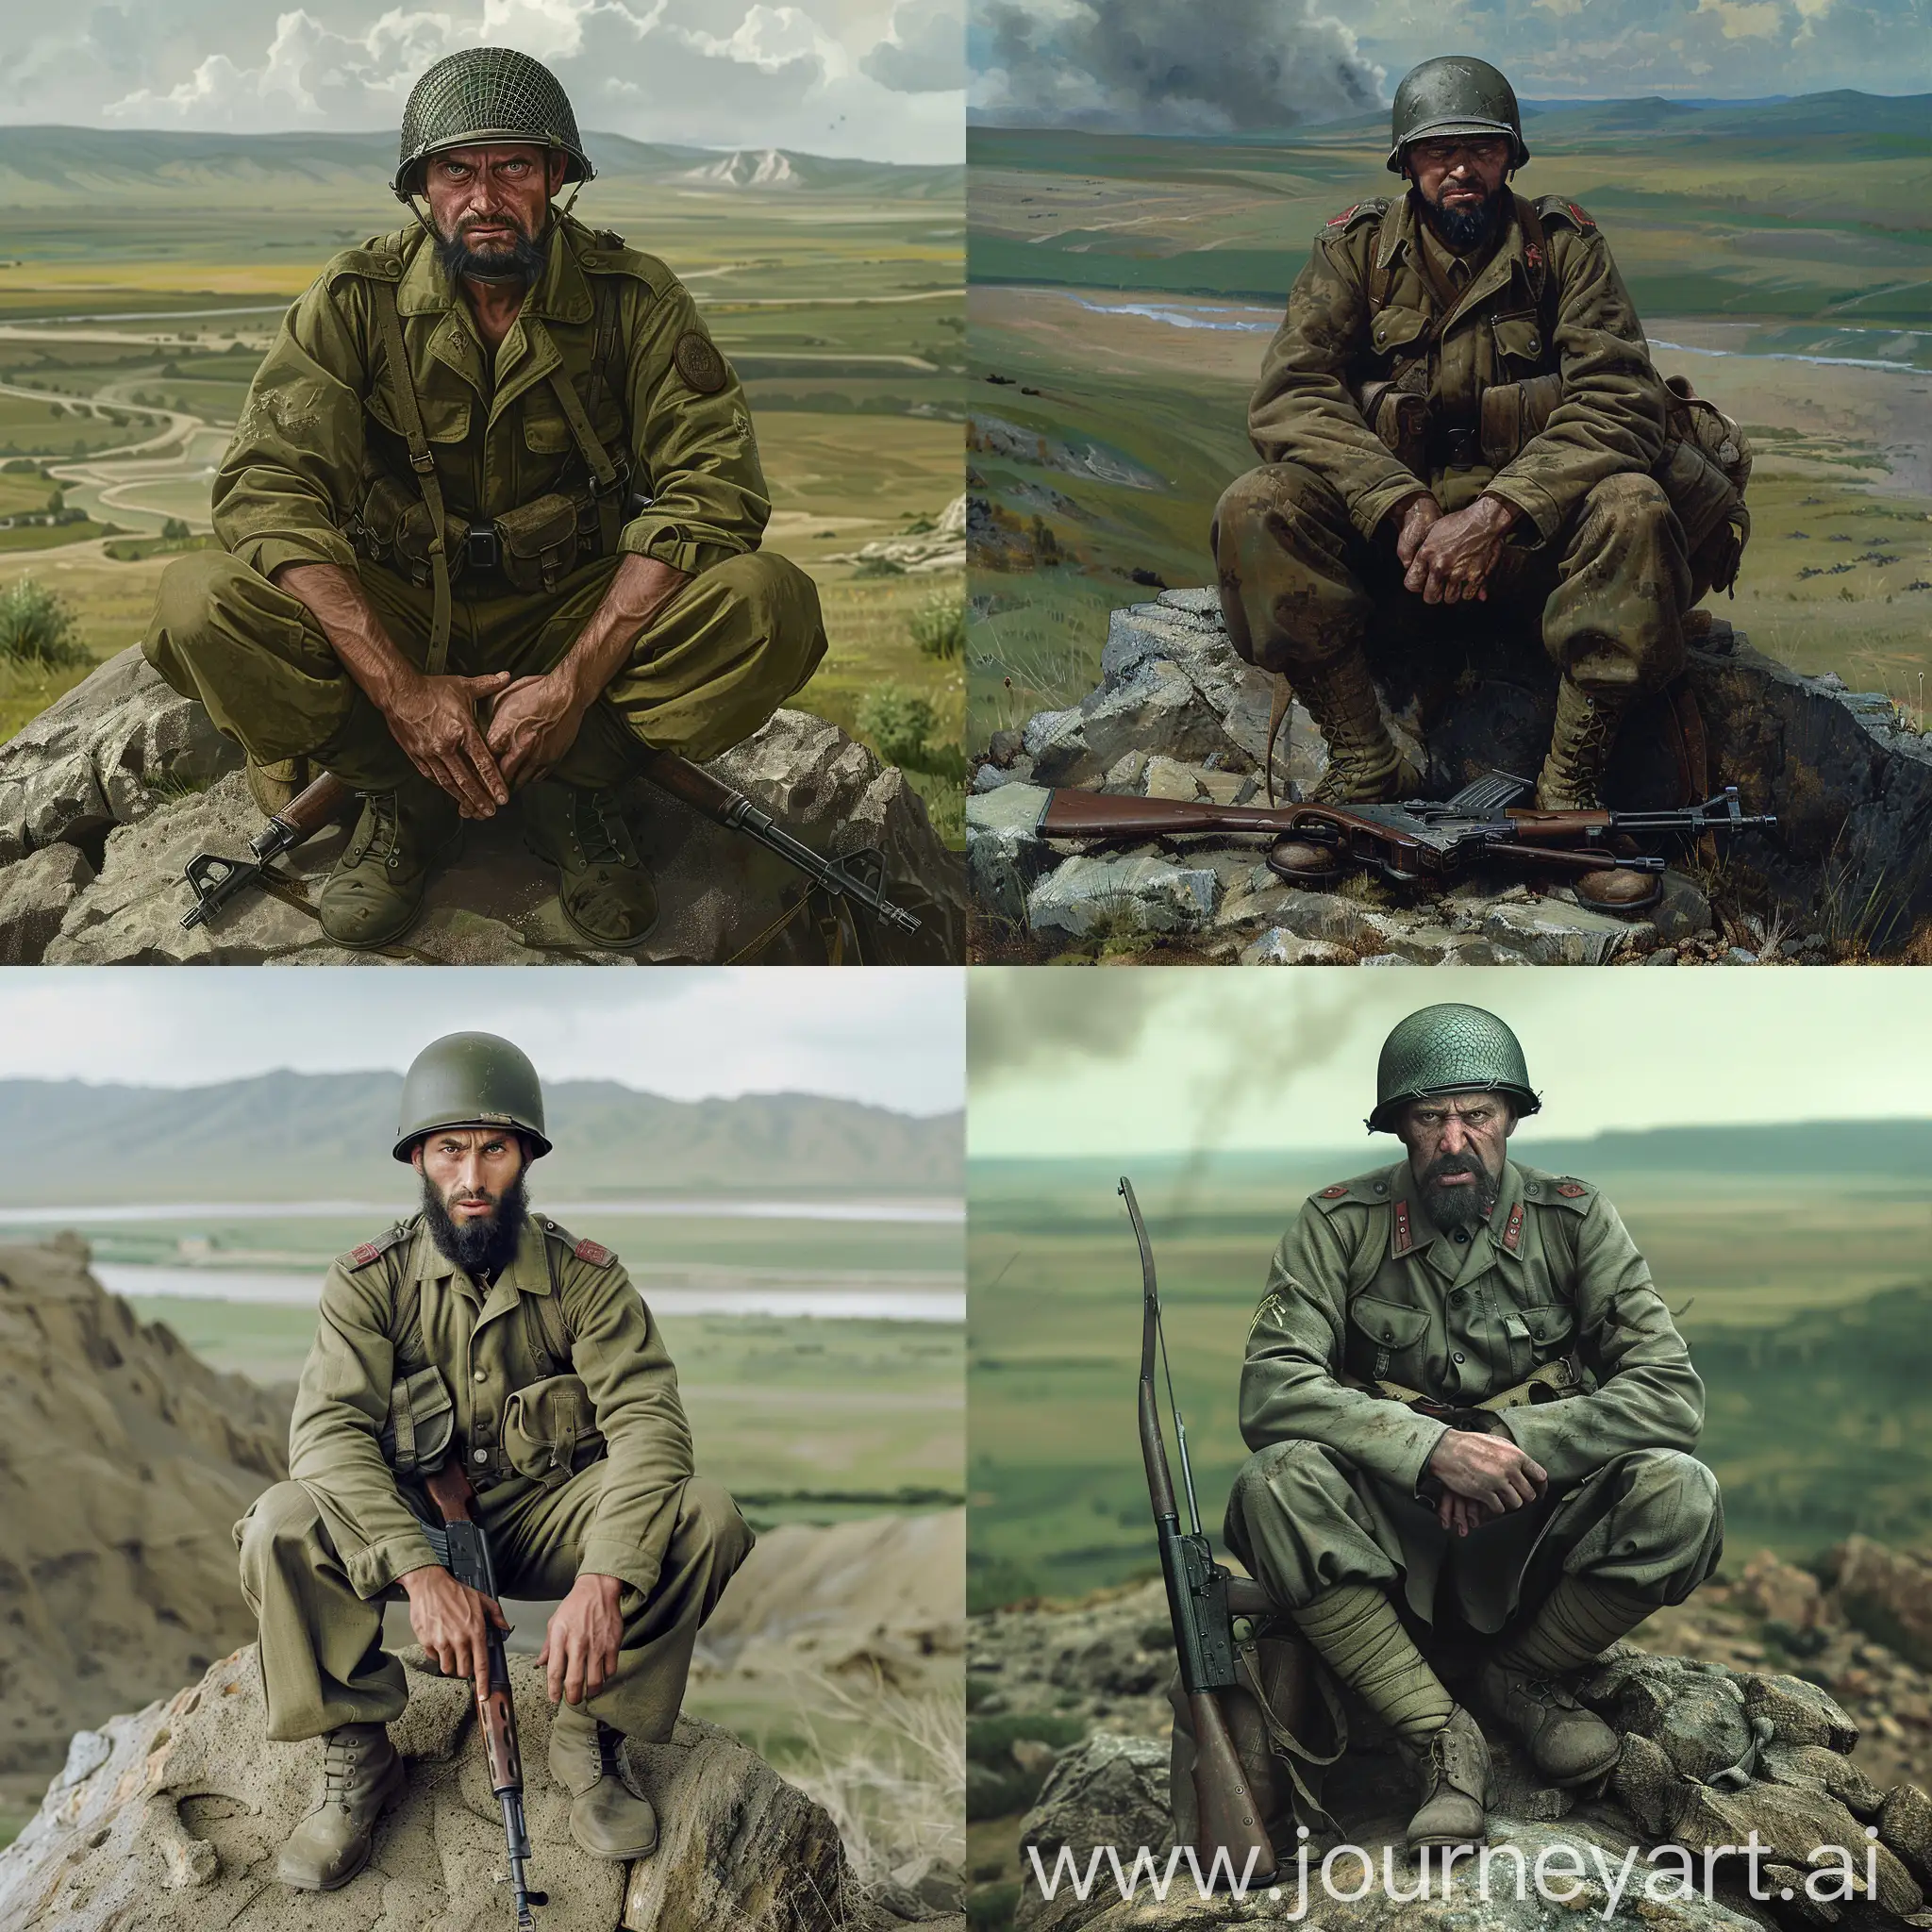 Angry-Soldier-Sitting-on-Rock-with-Kalashnikov-Rifle-in-Mountainous-Terrain